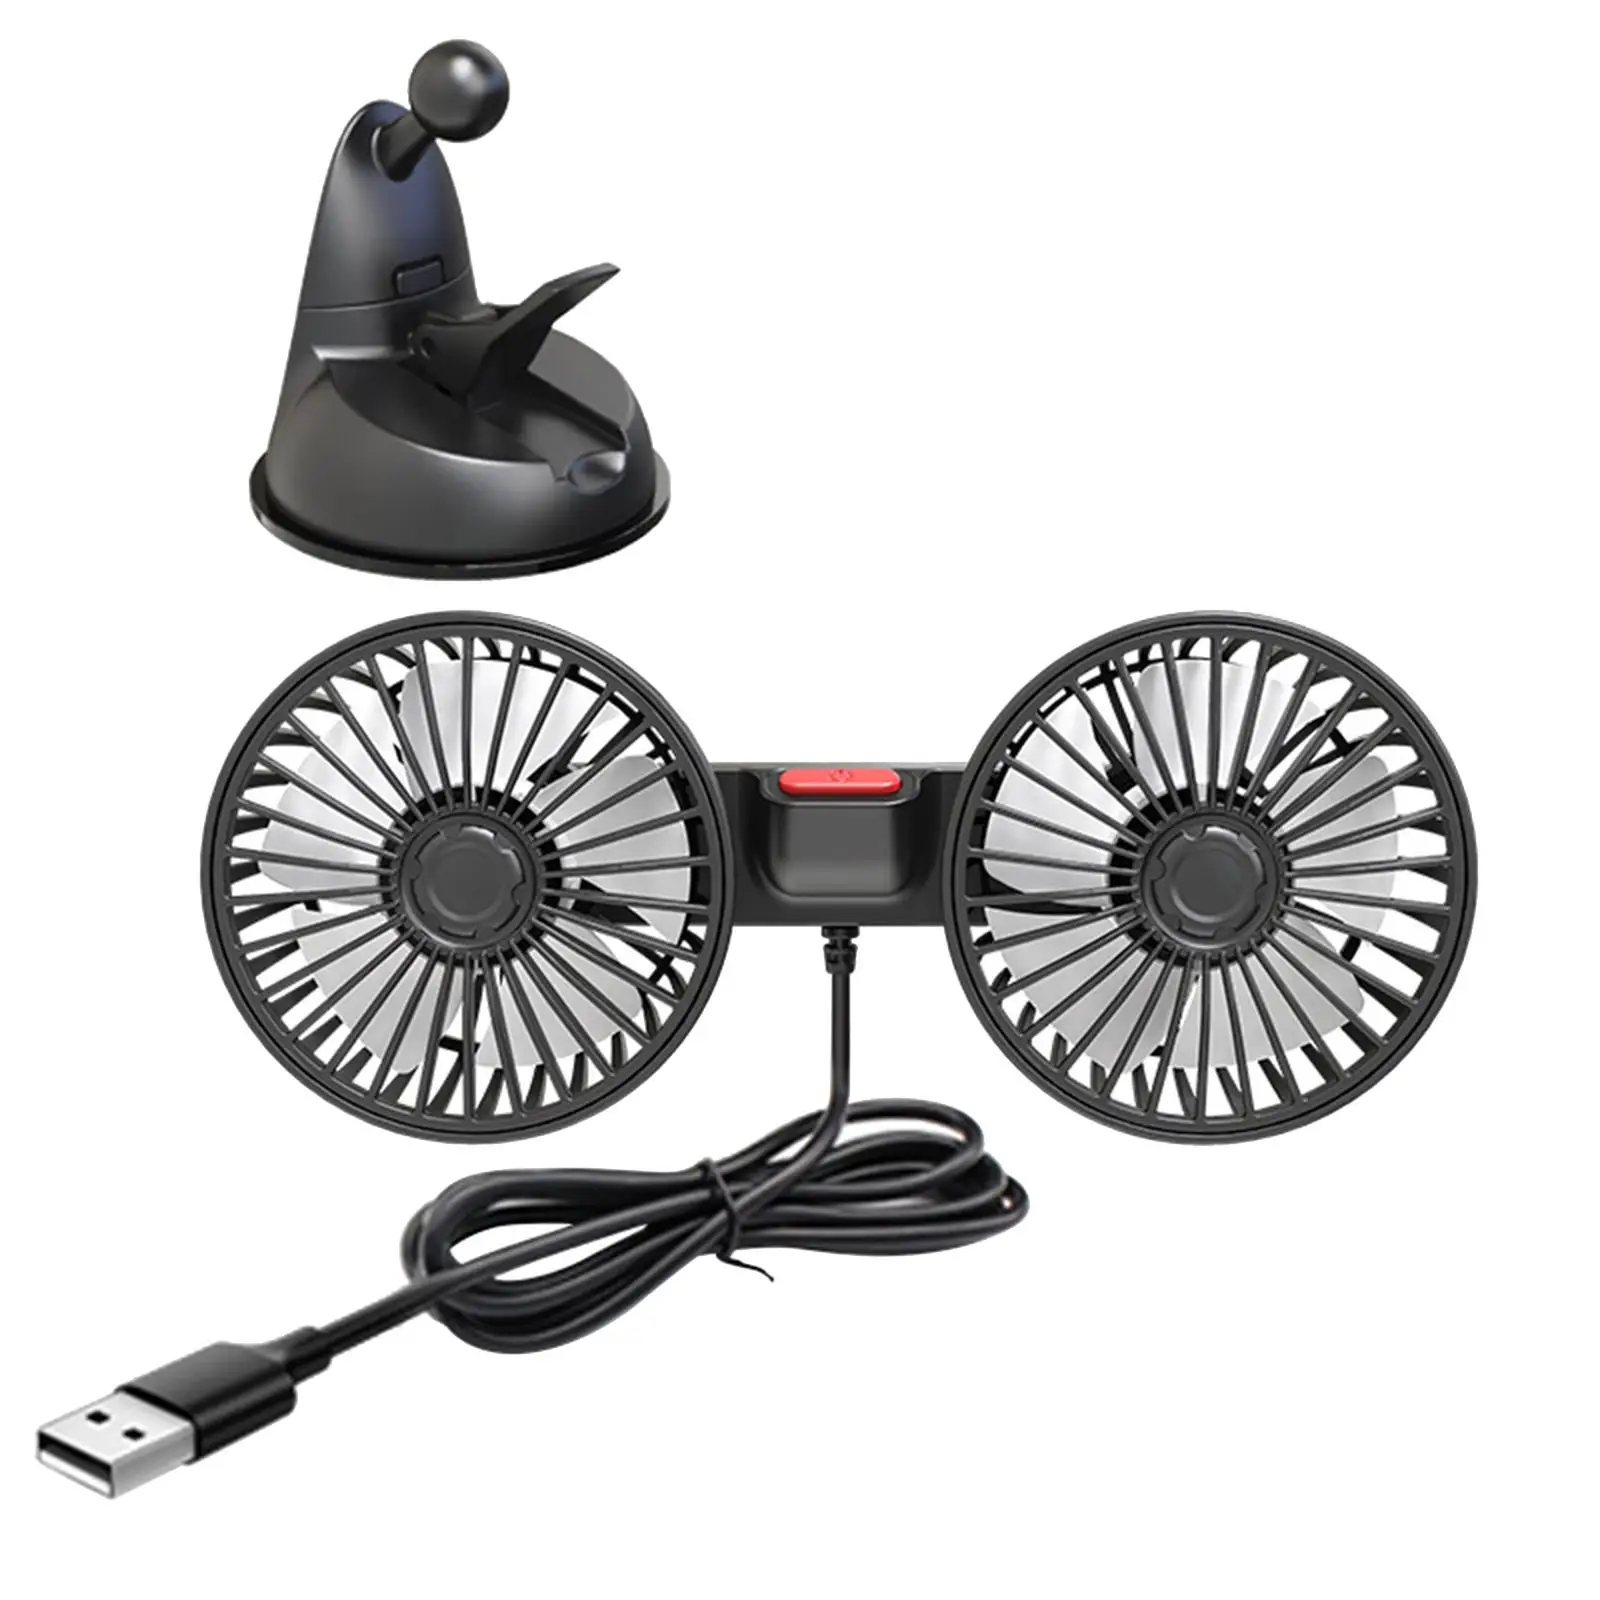 Car Cooling Fan Low Noise Desk Fan Mounted Wind Regulation 3 Speeds 5V 10W Air Cooler for RV Dashboard Office Home Sedan